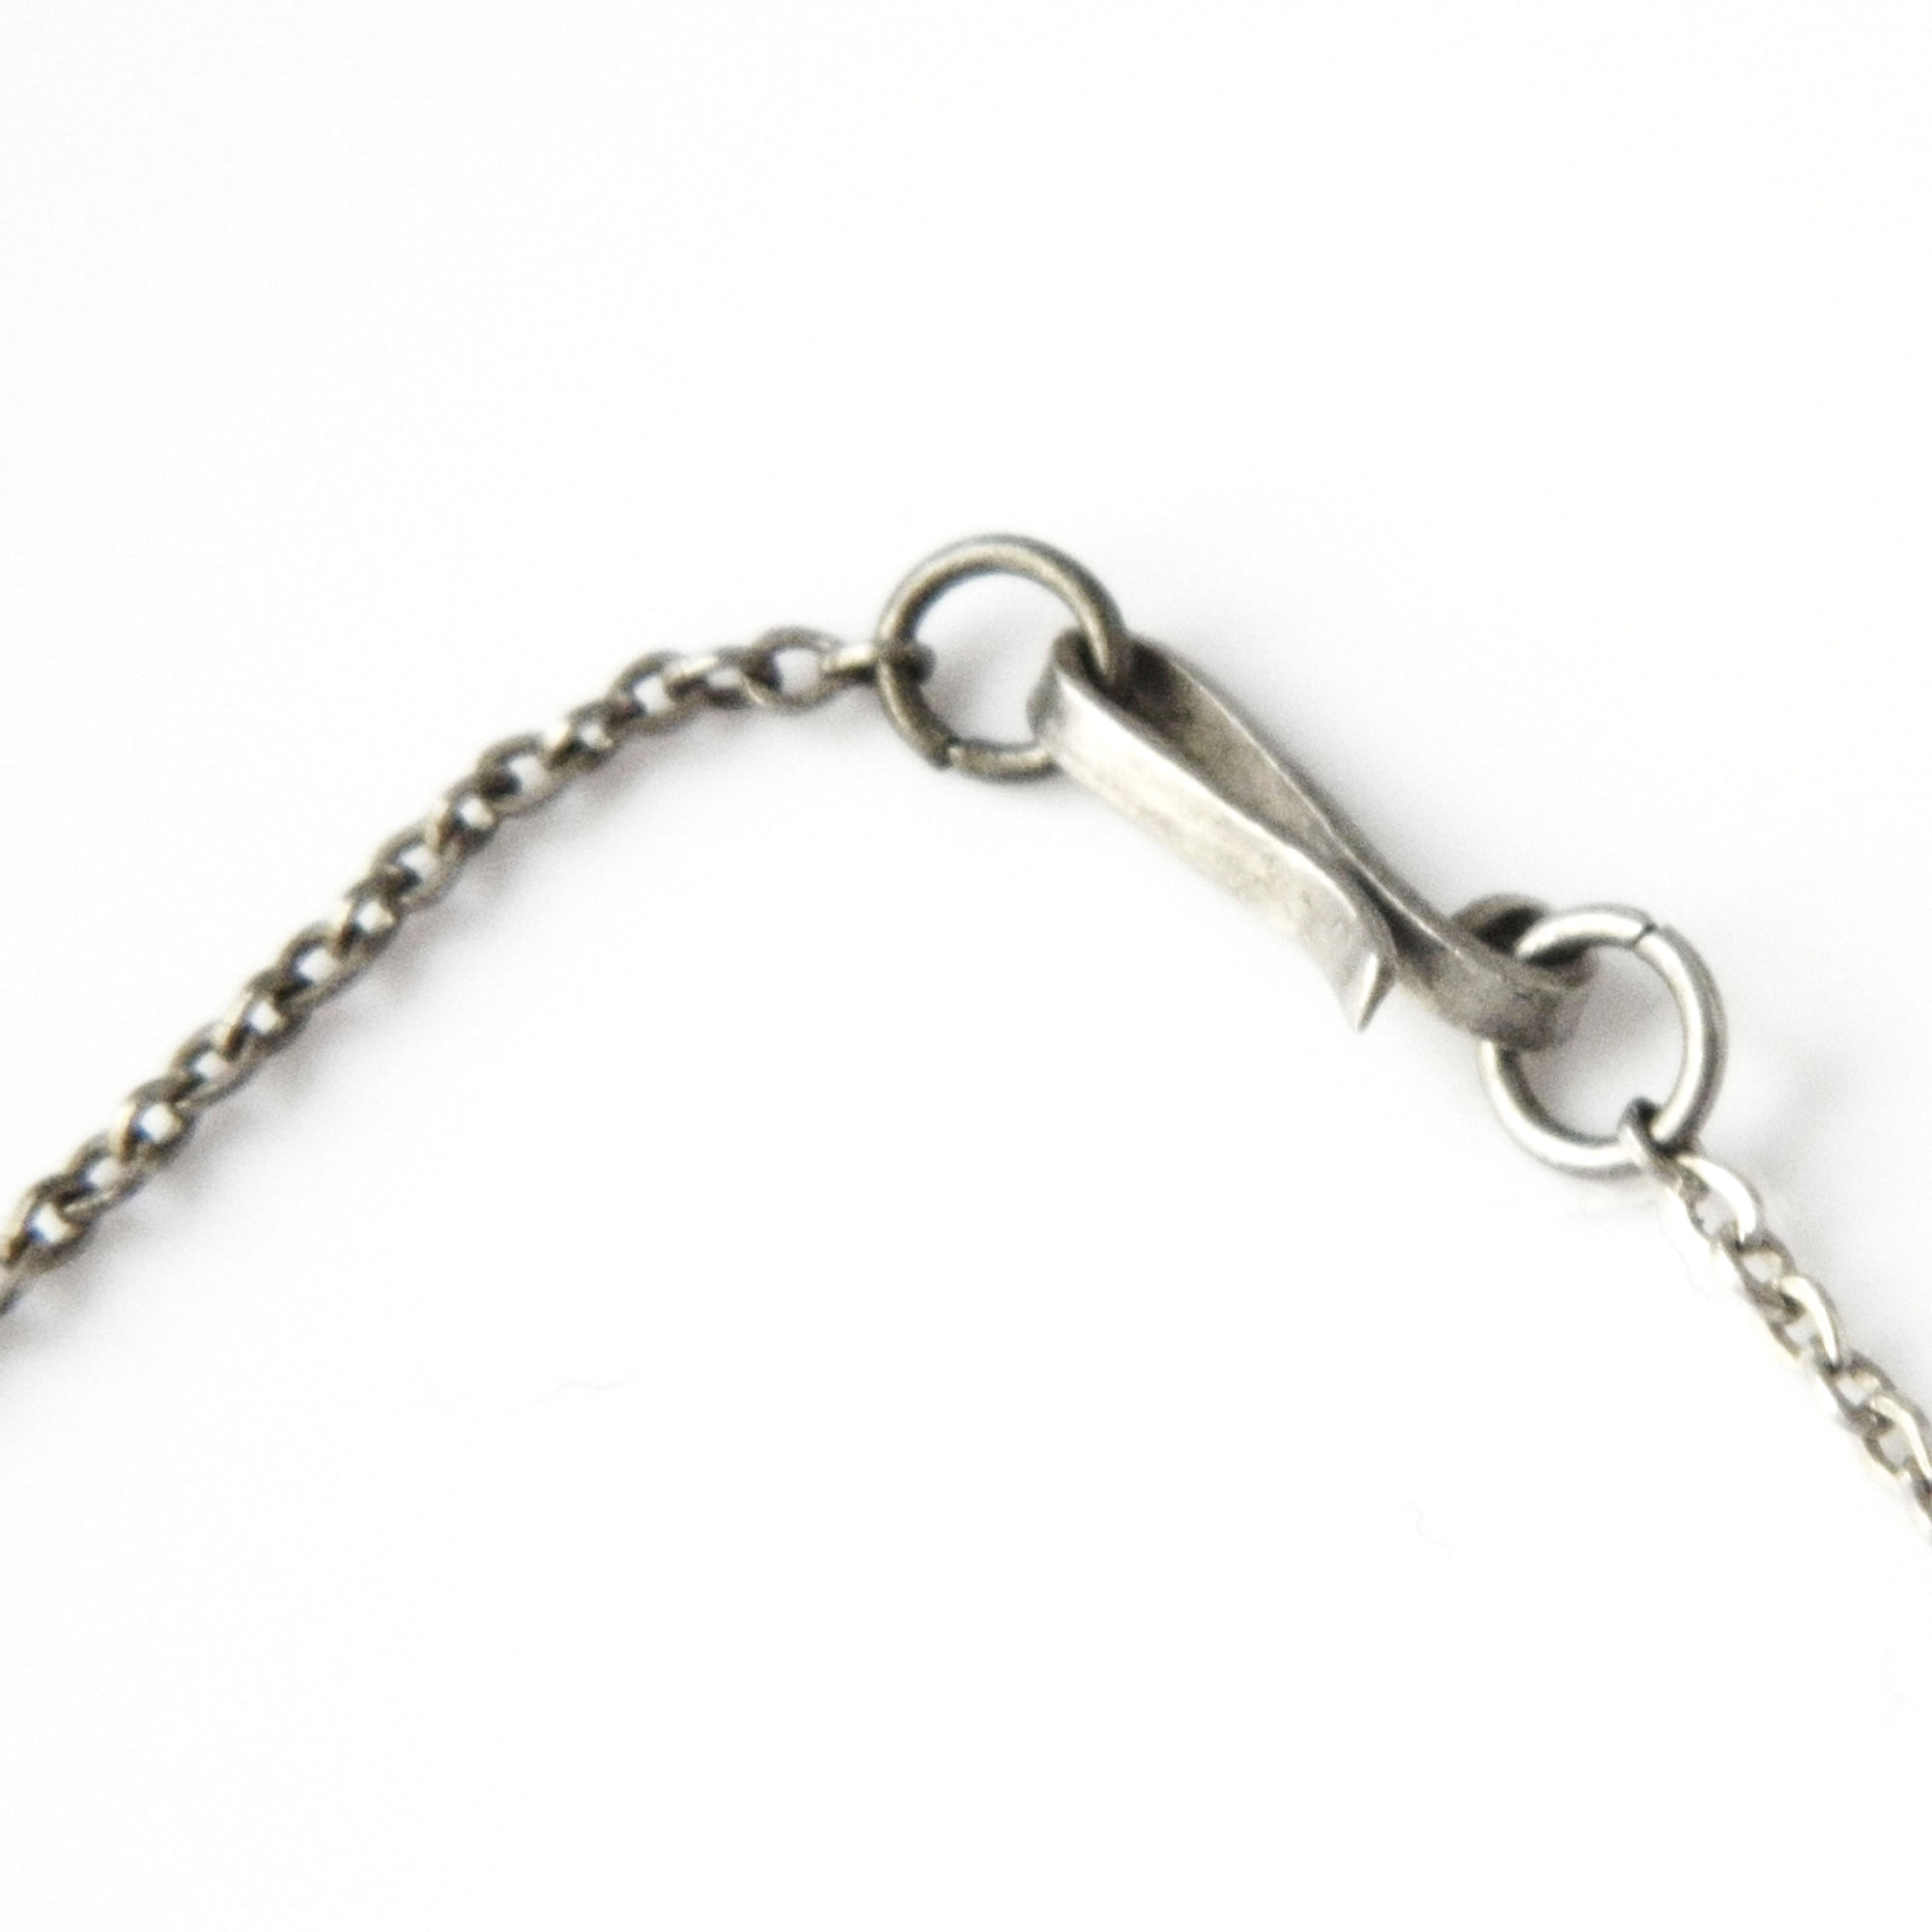 Chrysoprase sterling silver necklace set